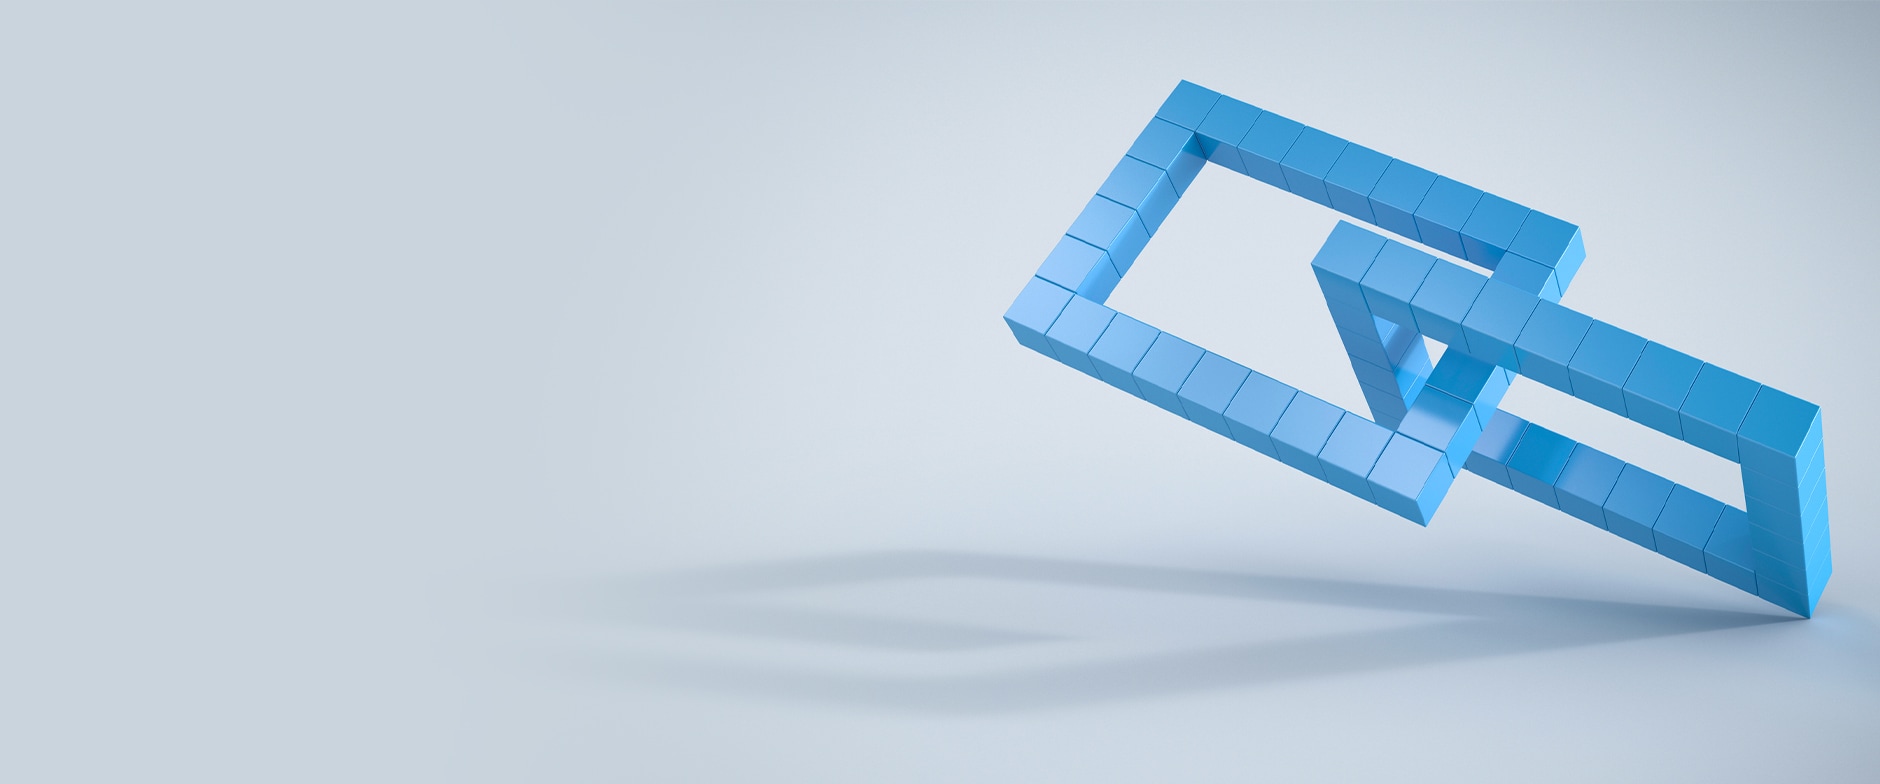 blue interlocking rectangles